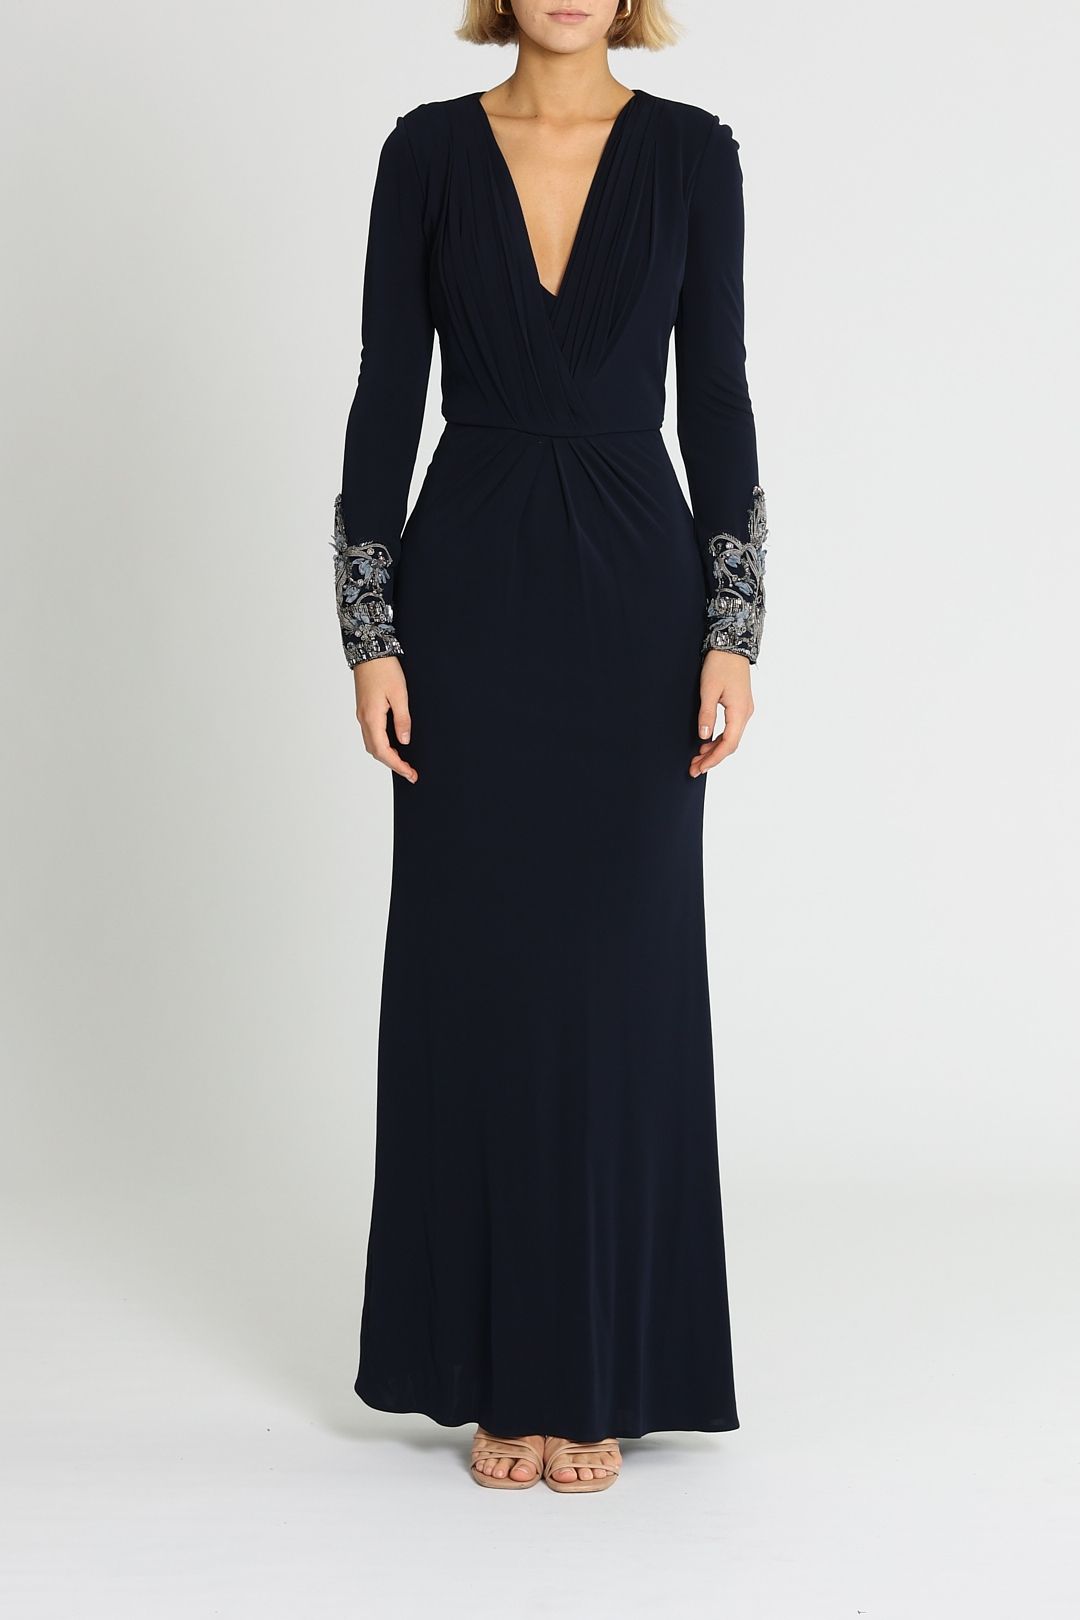 Embellished Gown by Badgley Mischka for Hire | GlamCorner